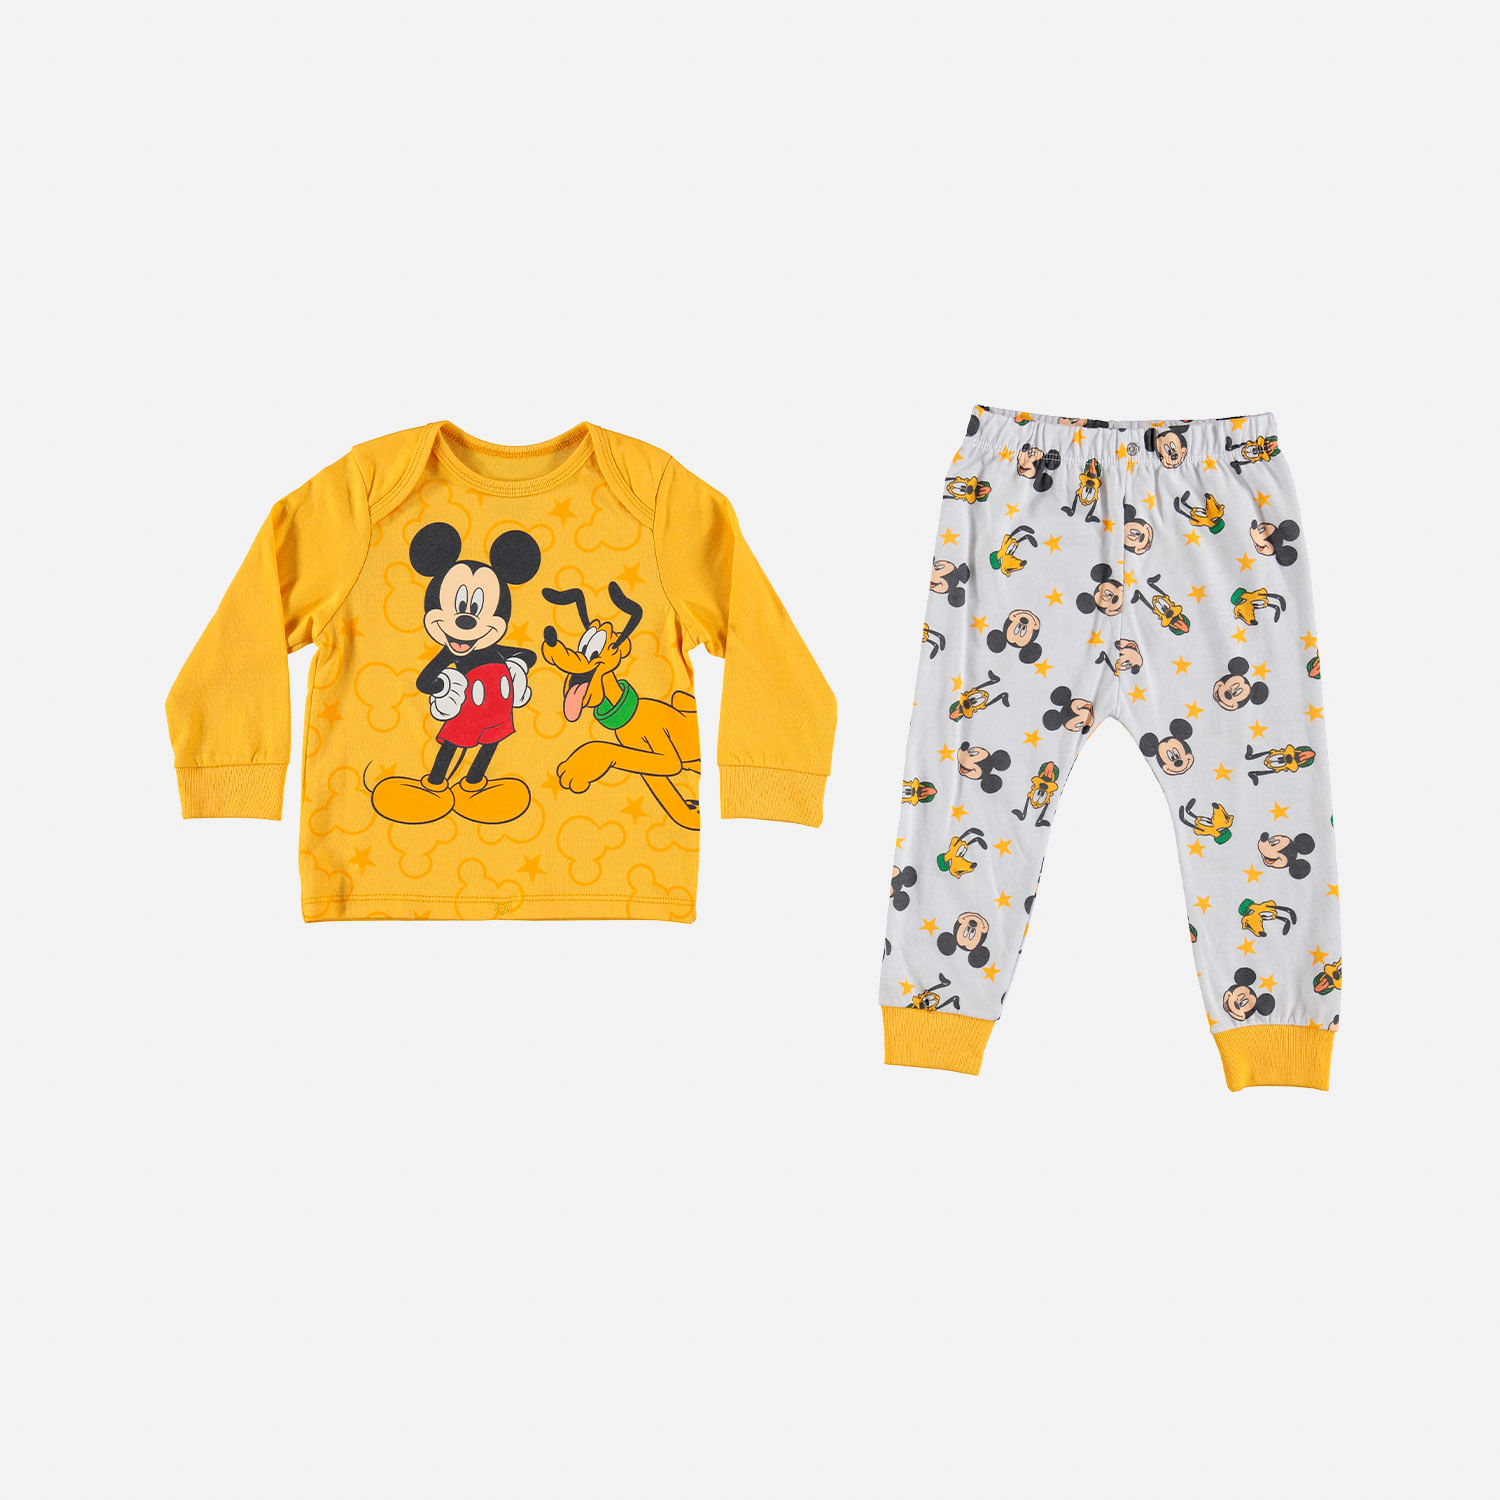 Pijama de bebé niño, manga larga/pantalón amarillo/blanco de Mickey Mouse